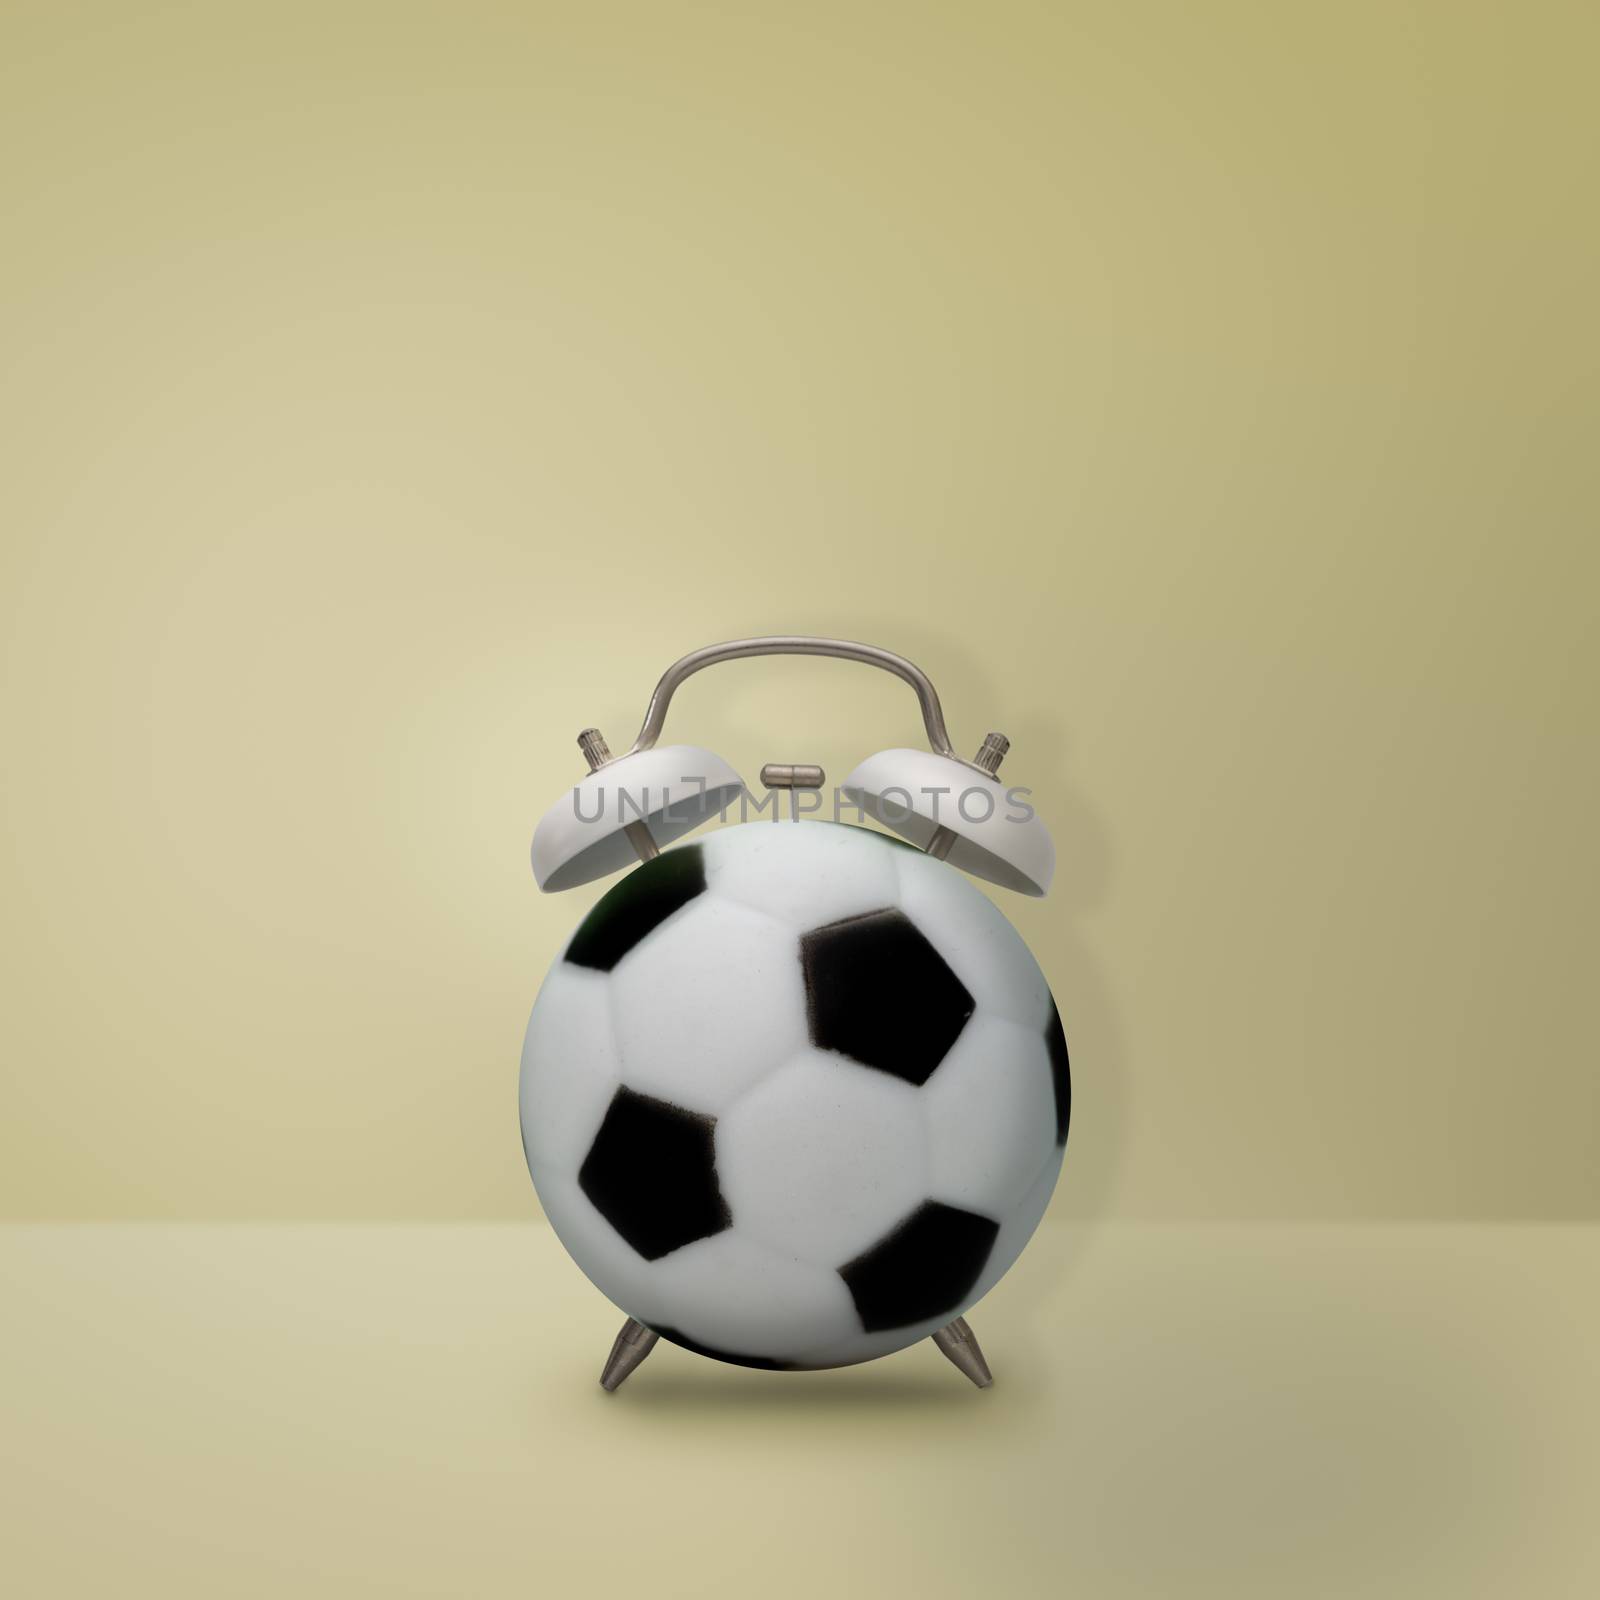 Football alarm clock on pastel yellow background, Creative idea minimal style, time concept.